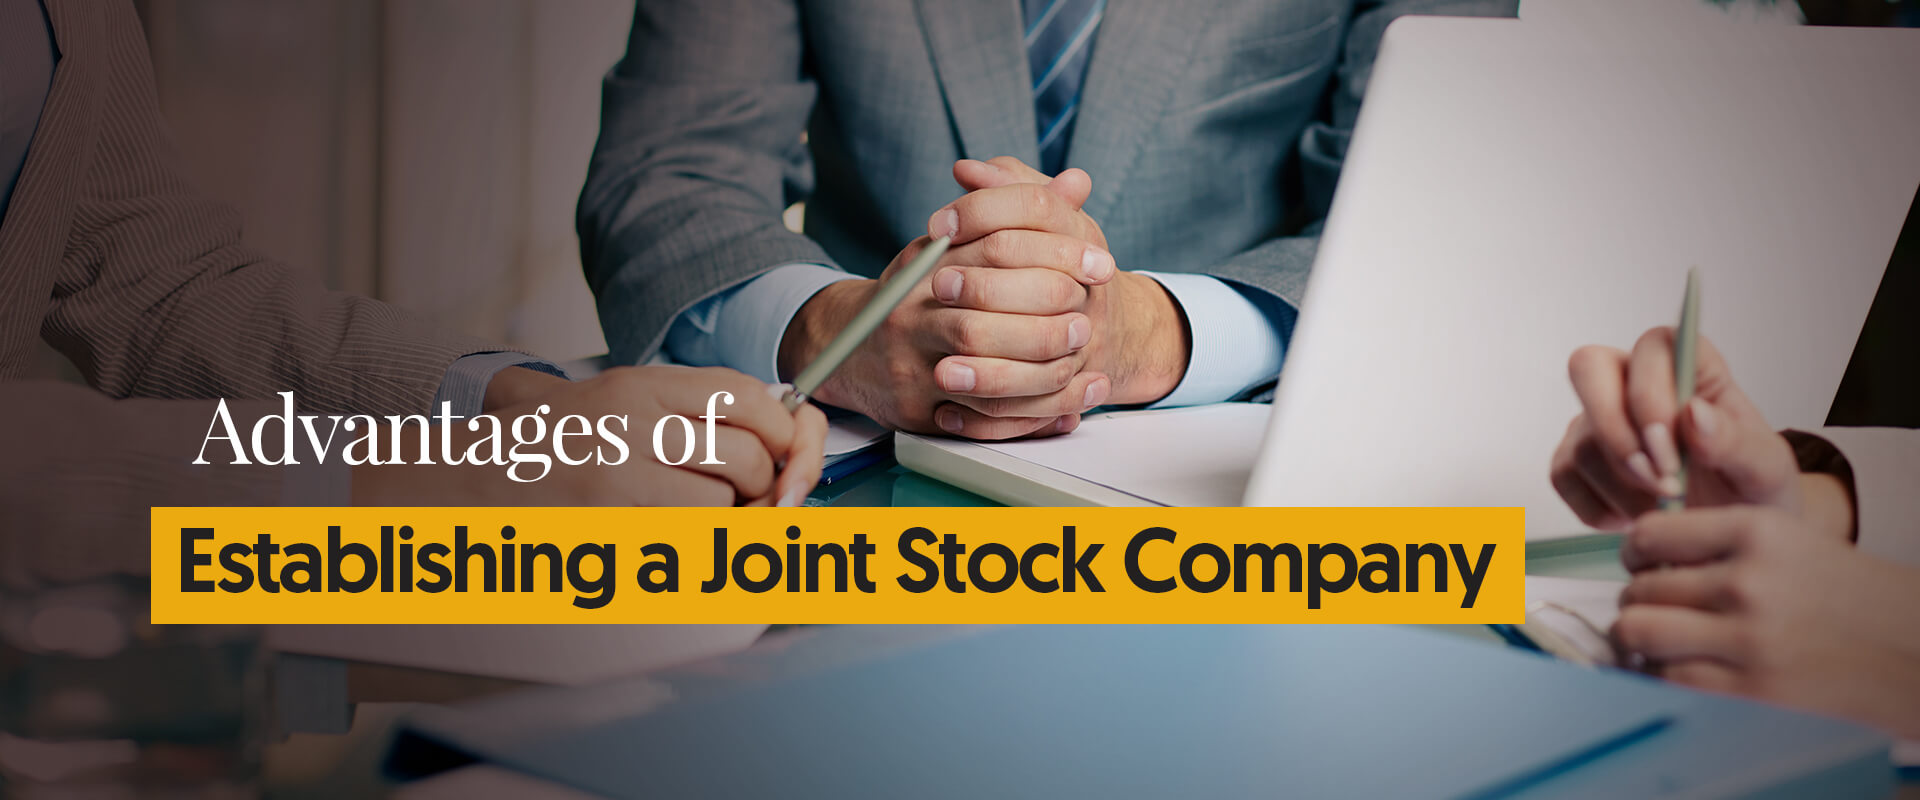 joint stock company advantages